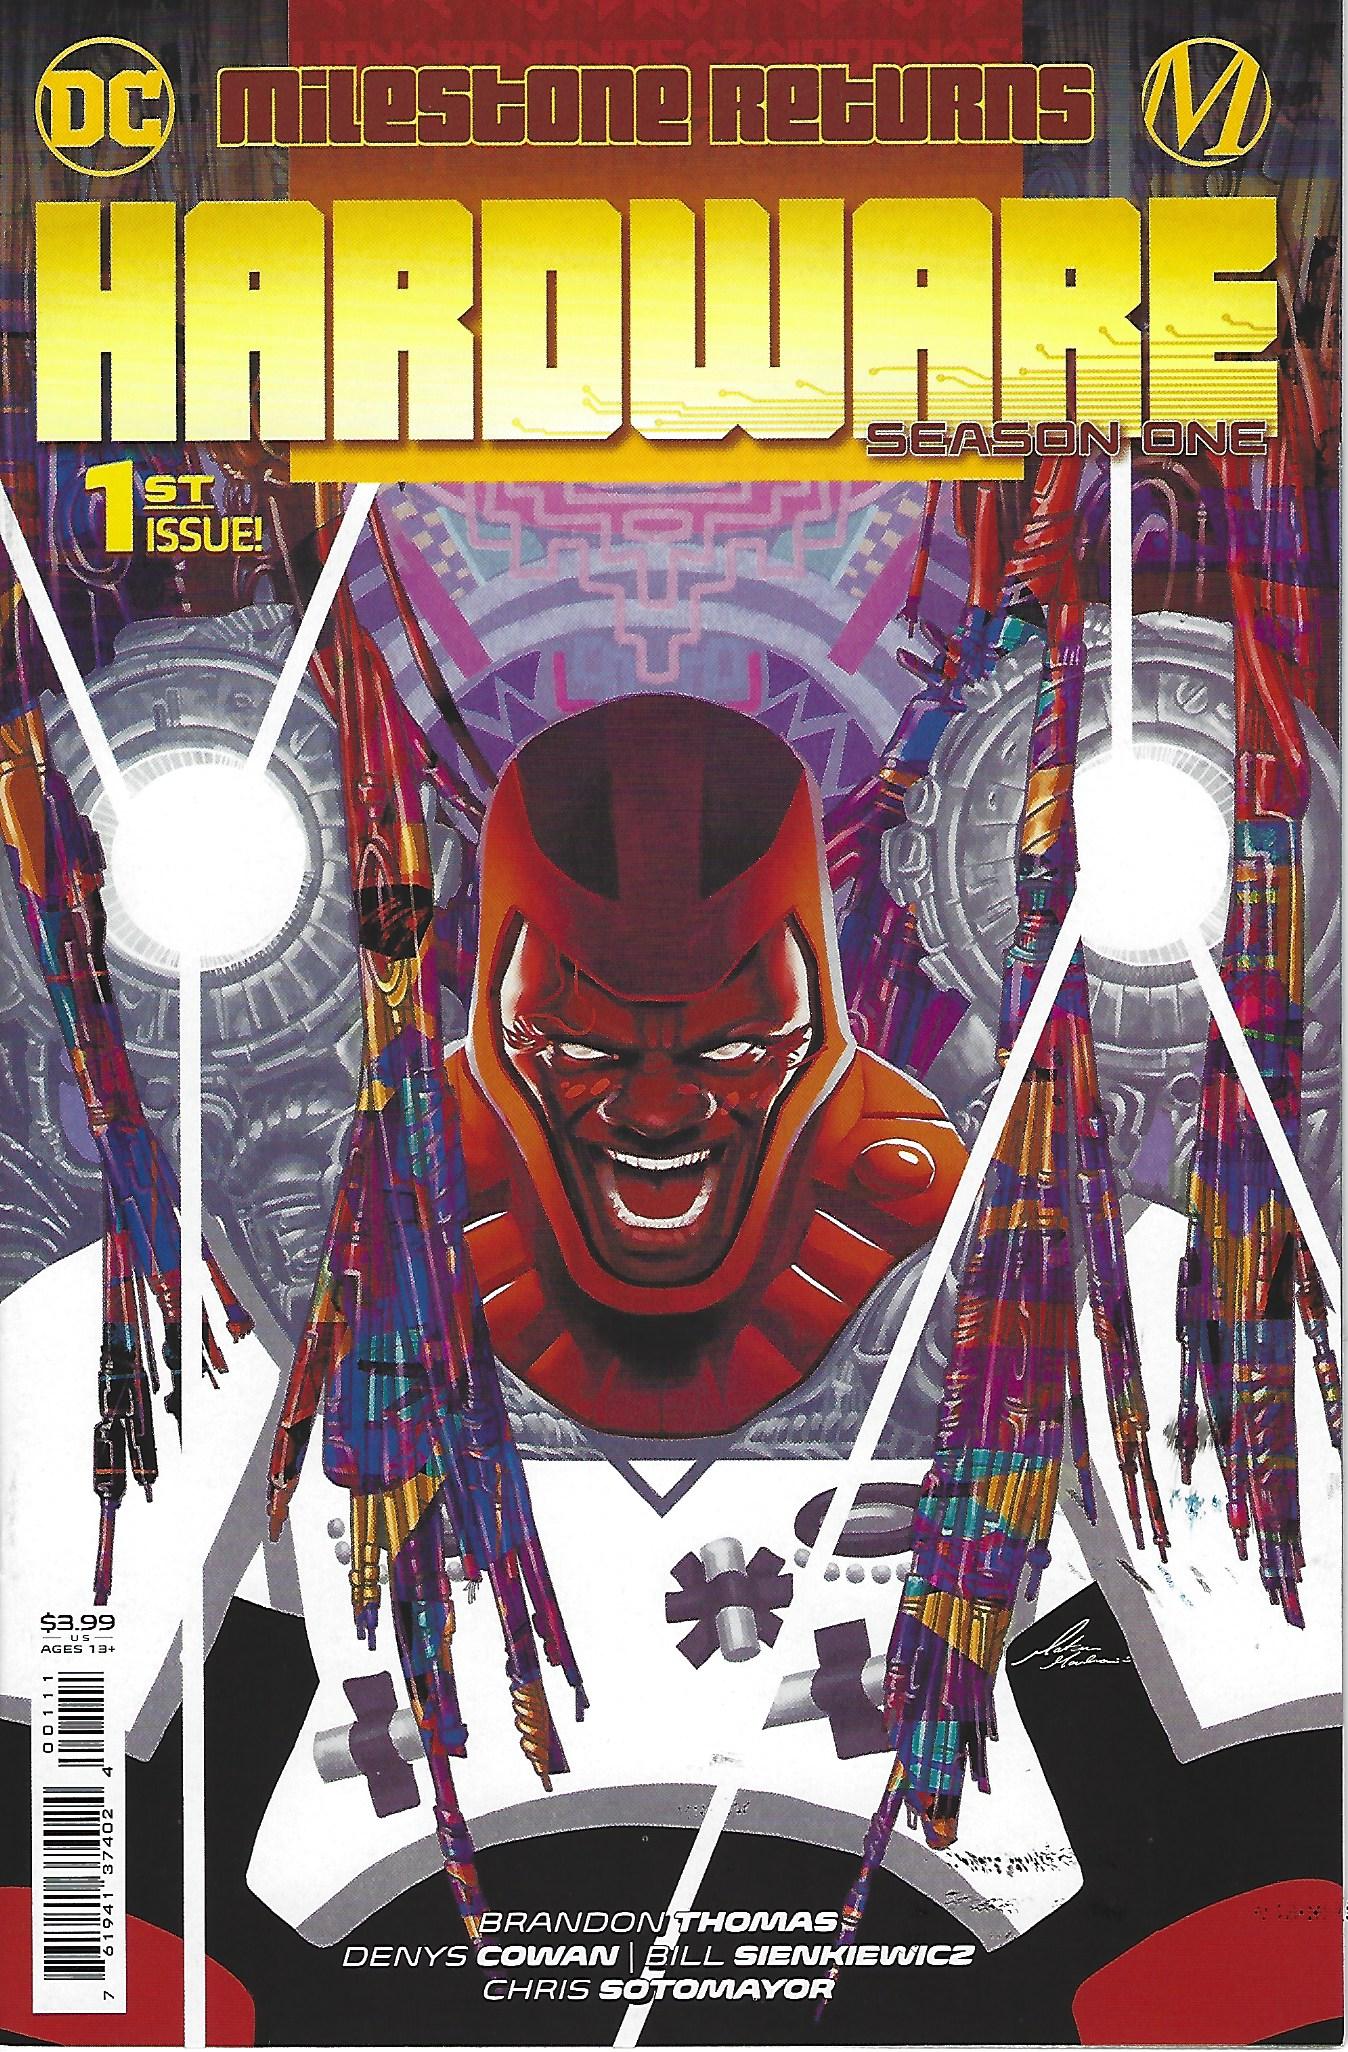 DC & Milestone Comics - Hardware Season One #1